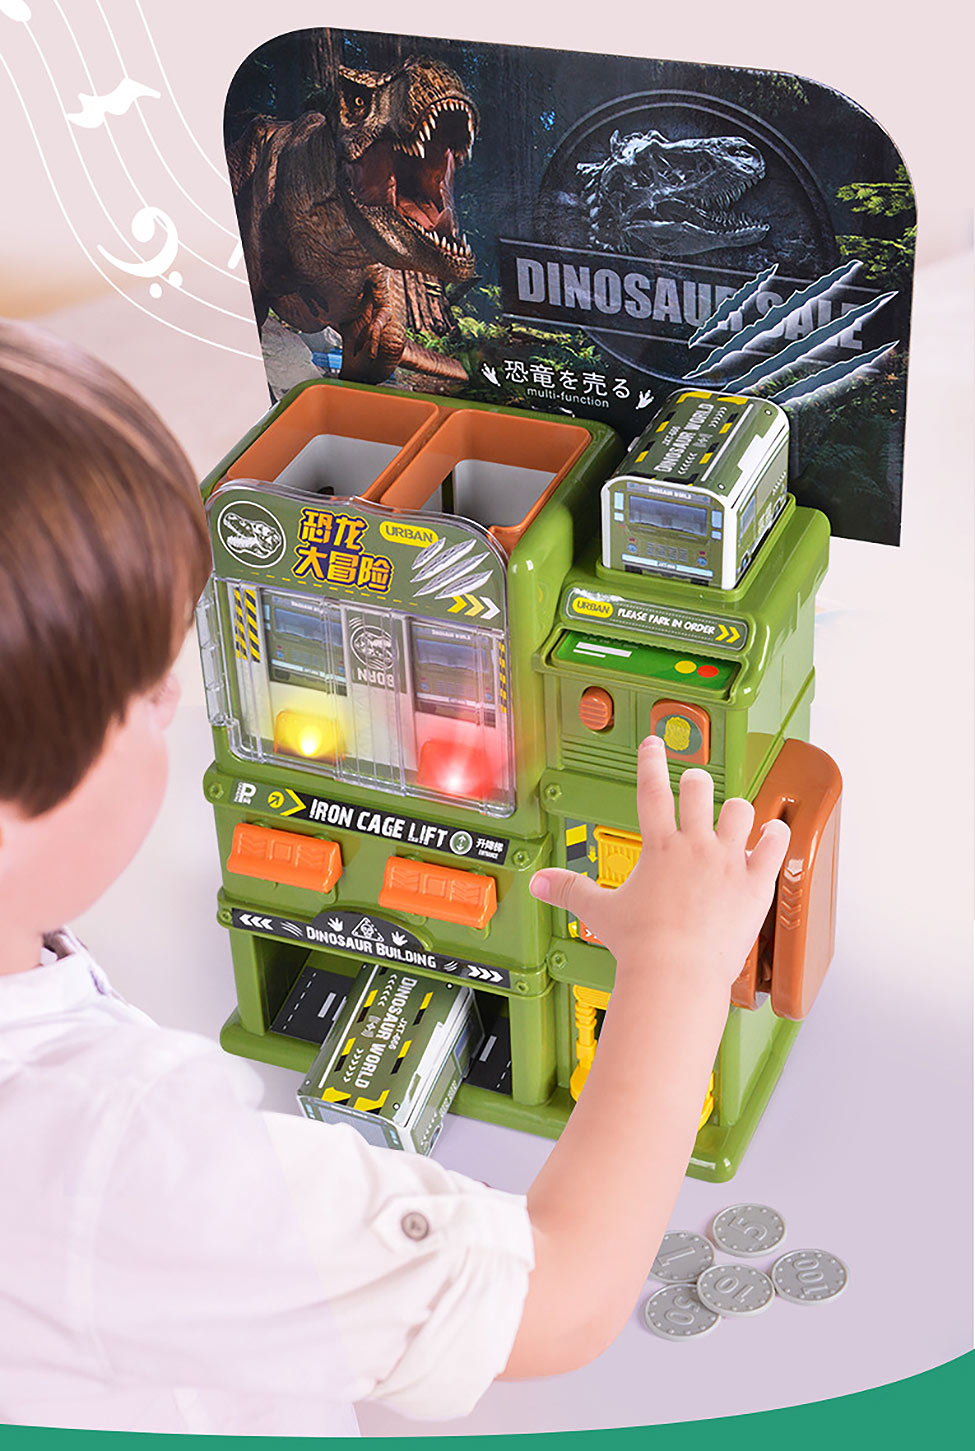 Automatic-Dinosaur-Building-Vending-Machine-Toy-with-10-Figurice-Dinosaur-9